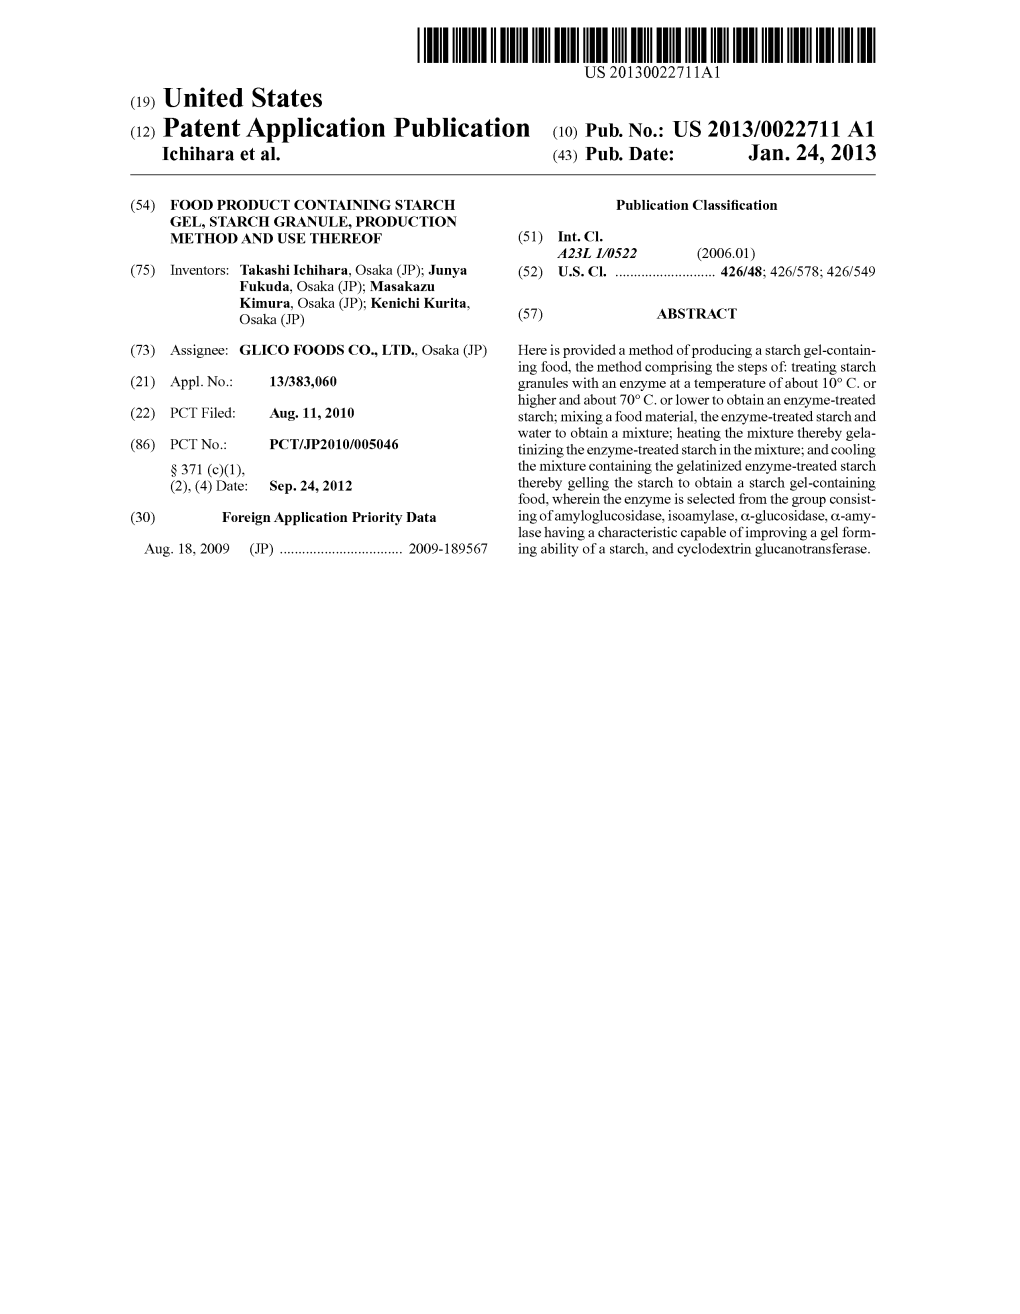 (12) Patent Application Publication (10) Pub. No.: US 2013/0022711 A1 Ichihara Et Al